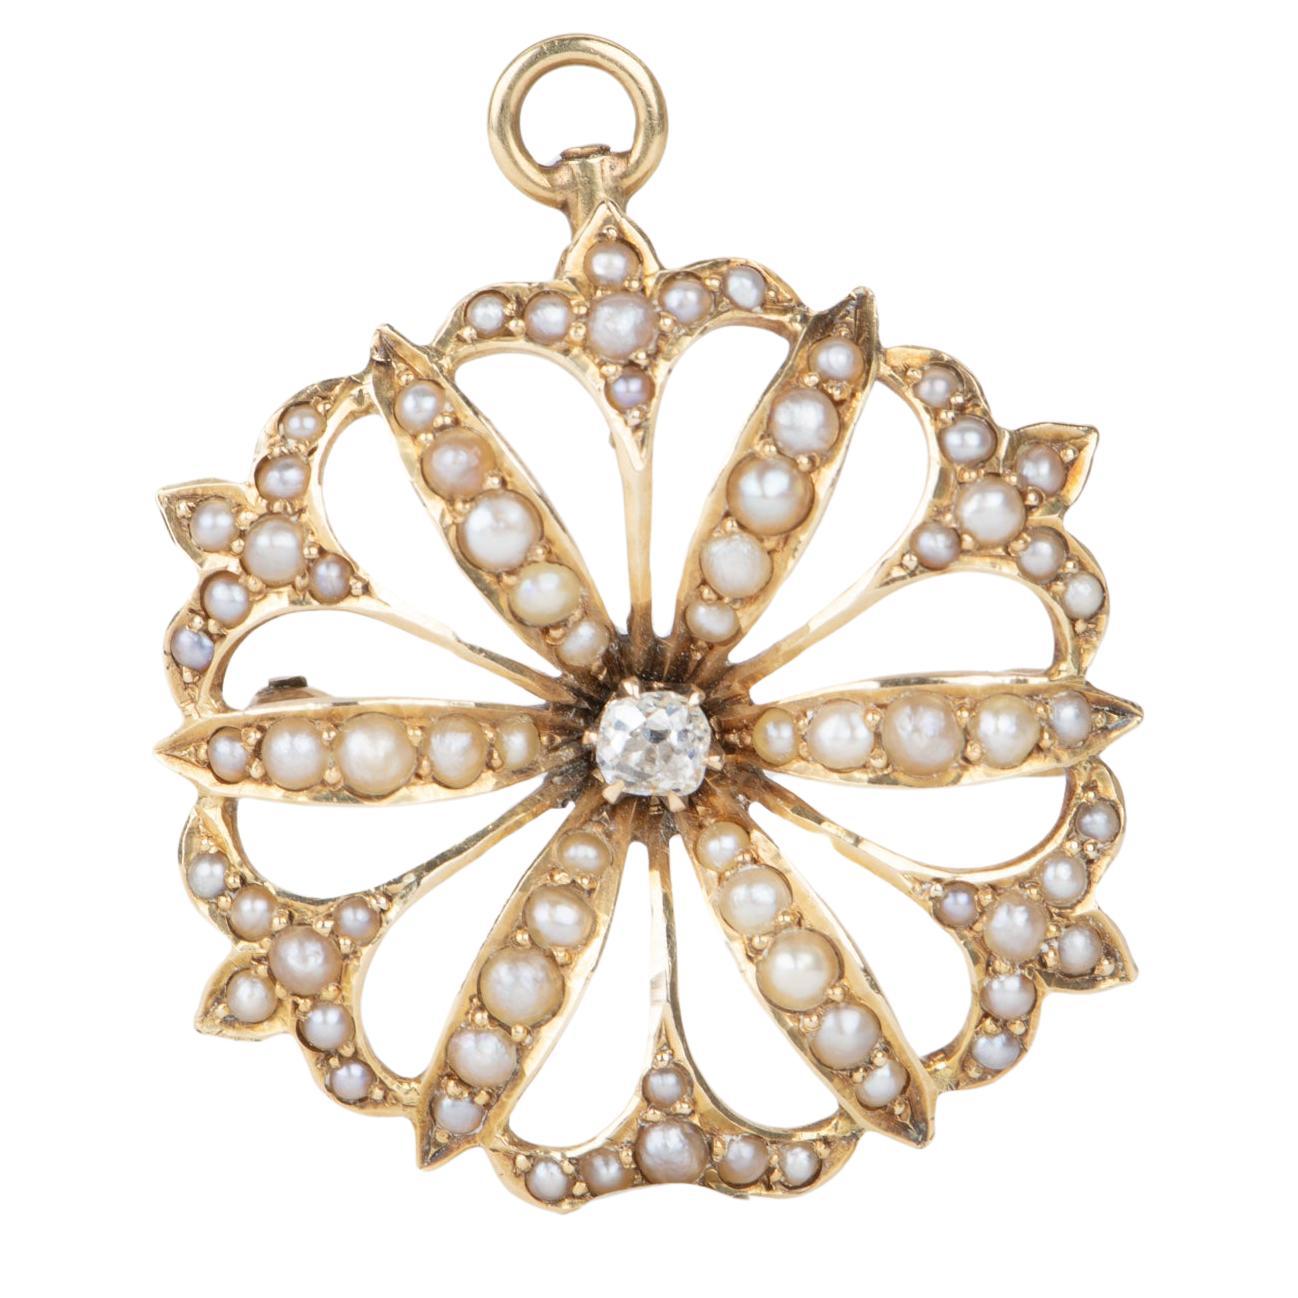 Antique Art Nouveau Seed Pearl Floral Pin Brooch Pendant 14K Gold V1088